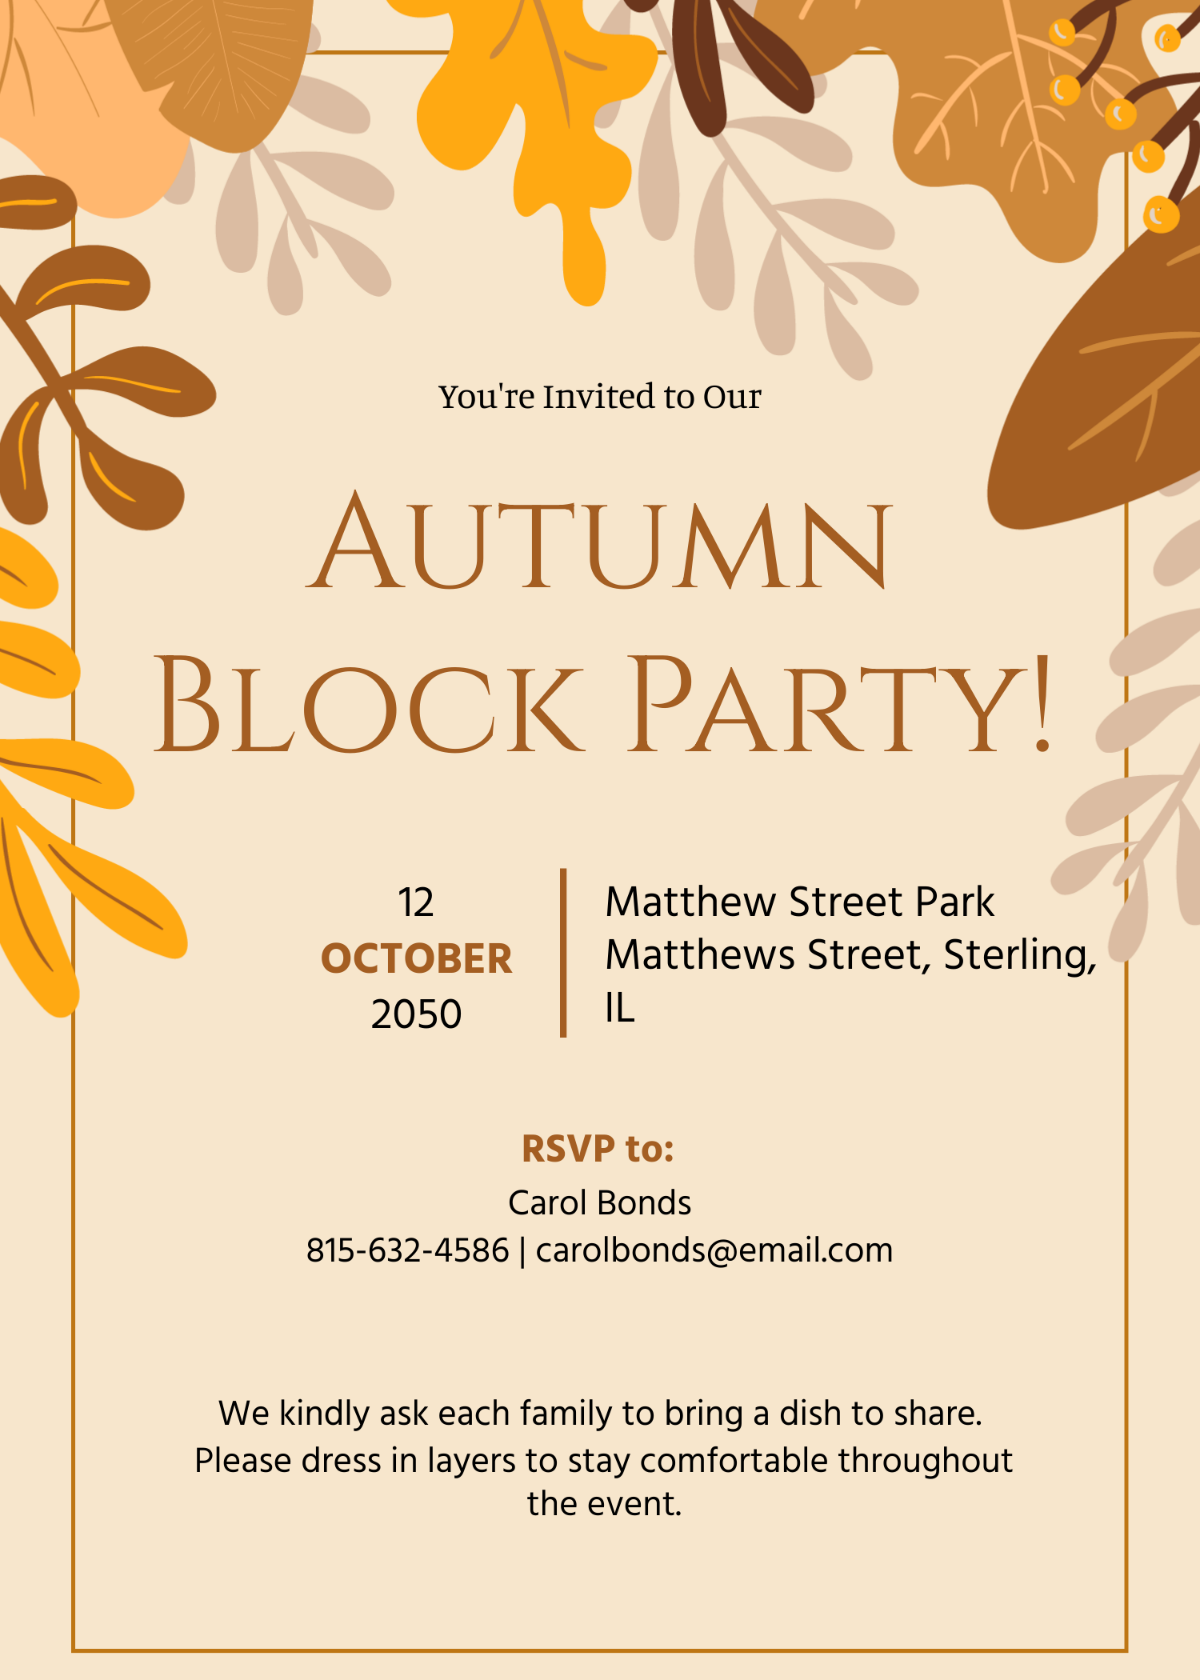 Antumn Block Party Invitation